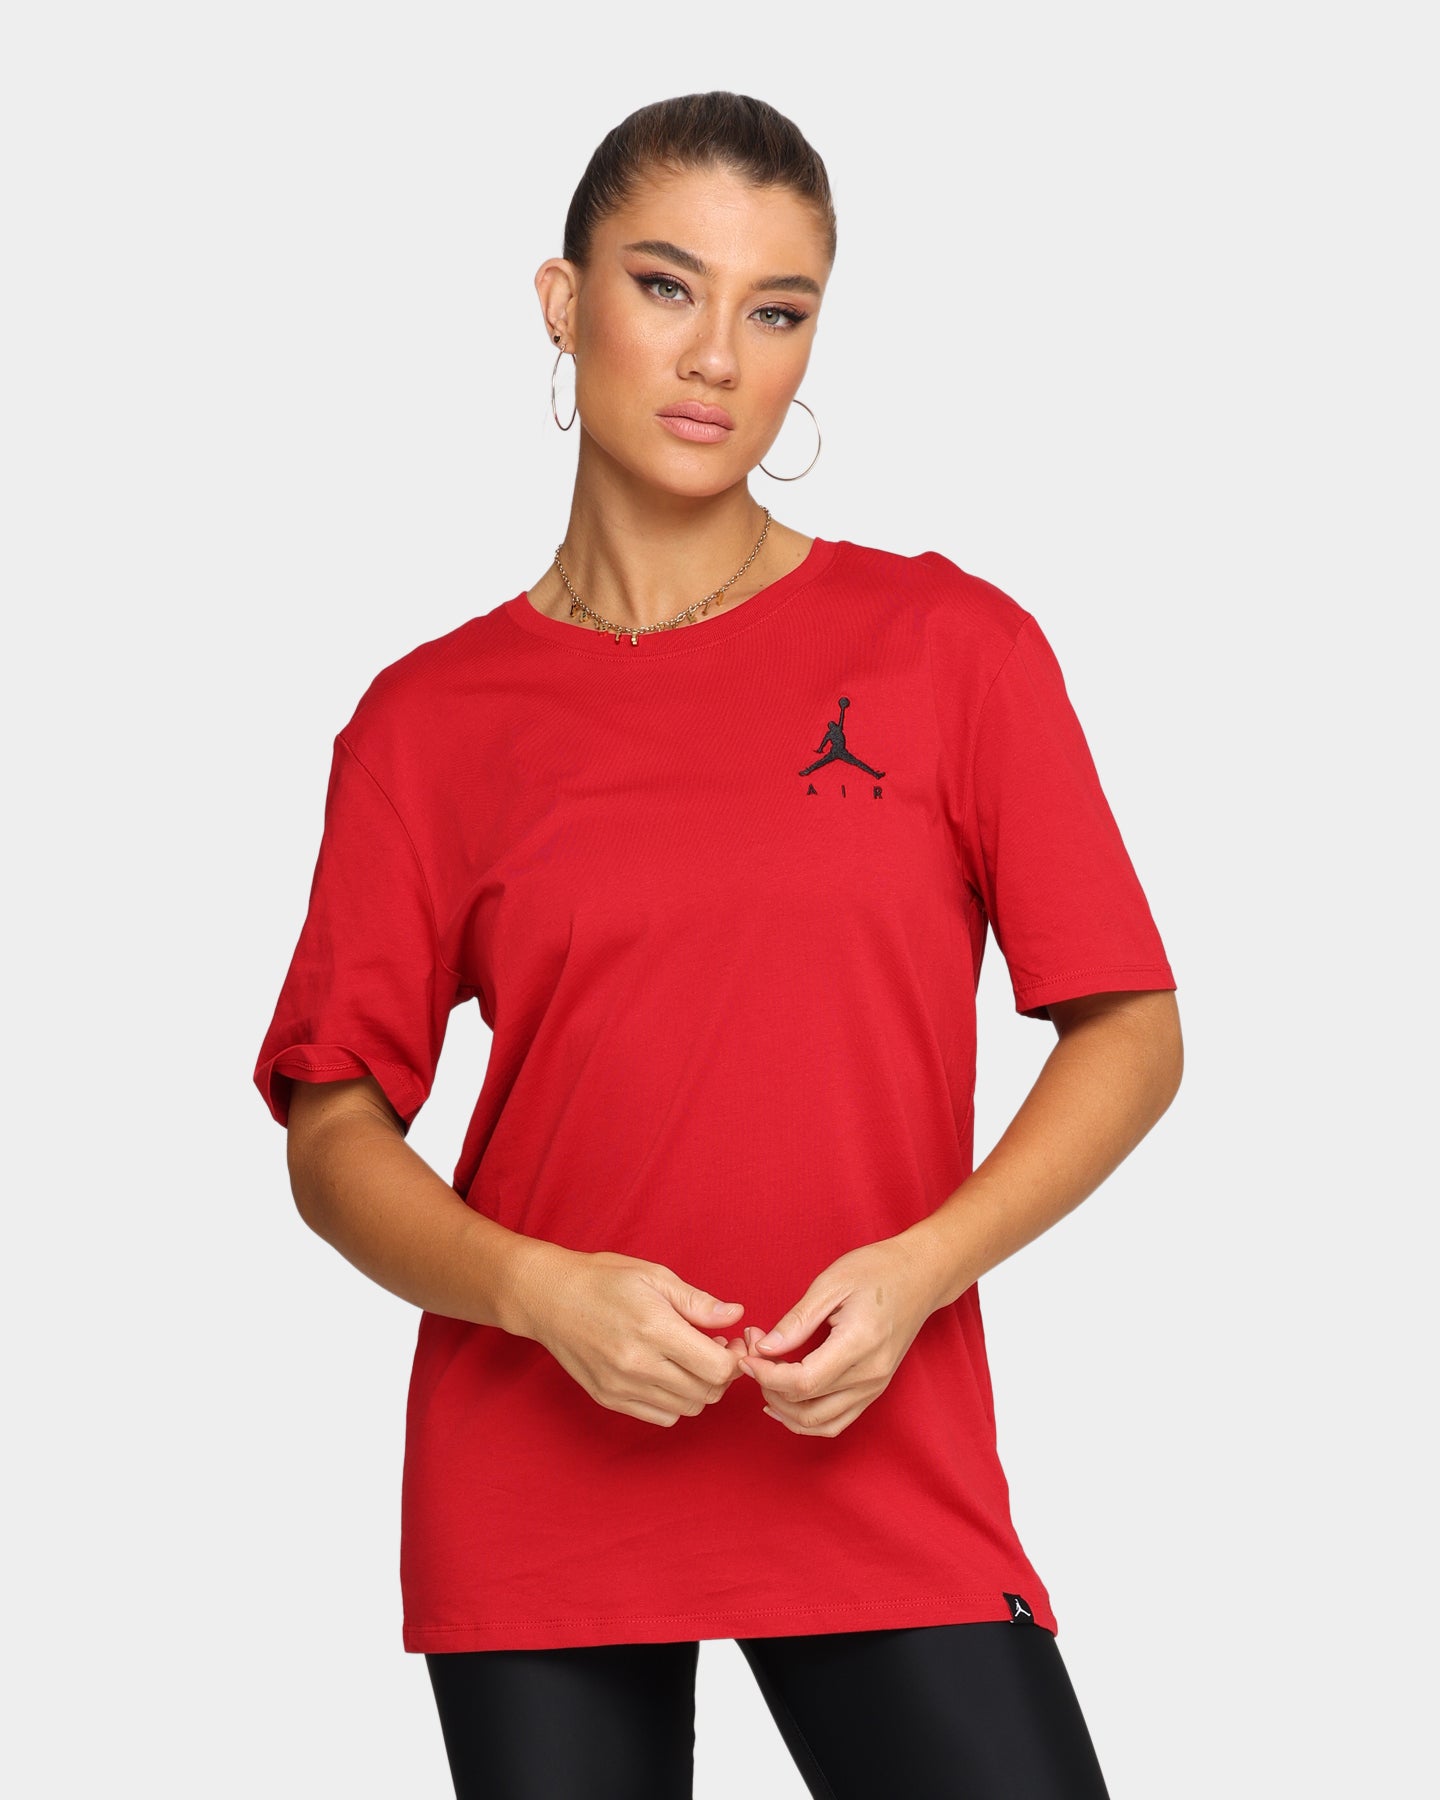 black and red jordan shirt womens